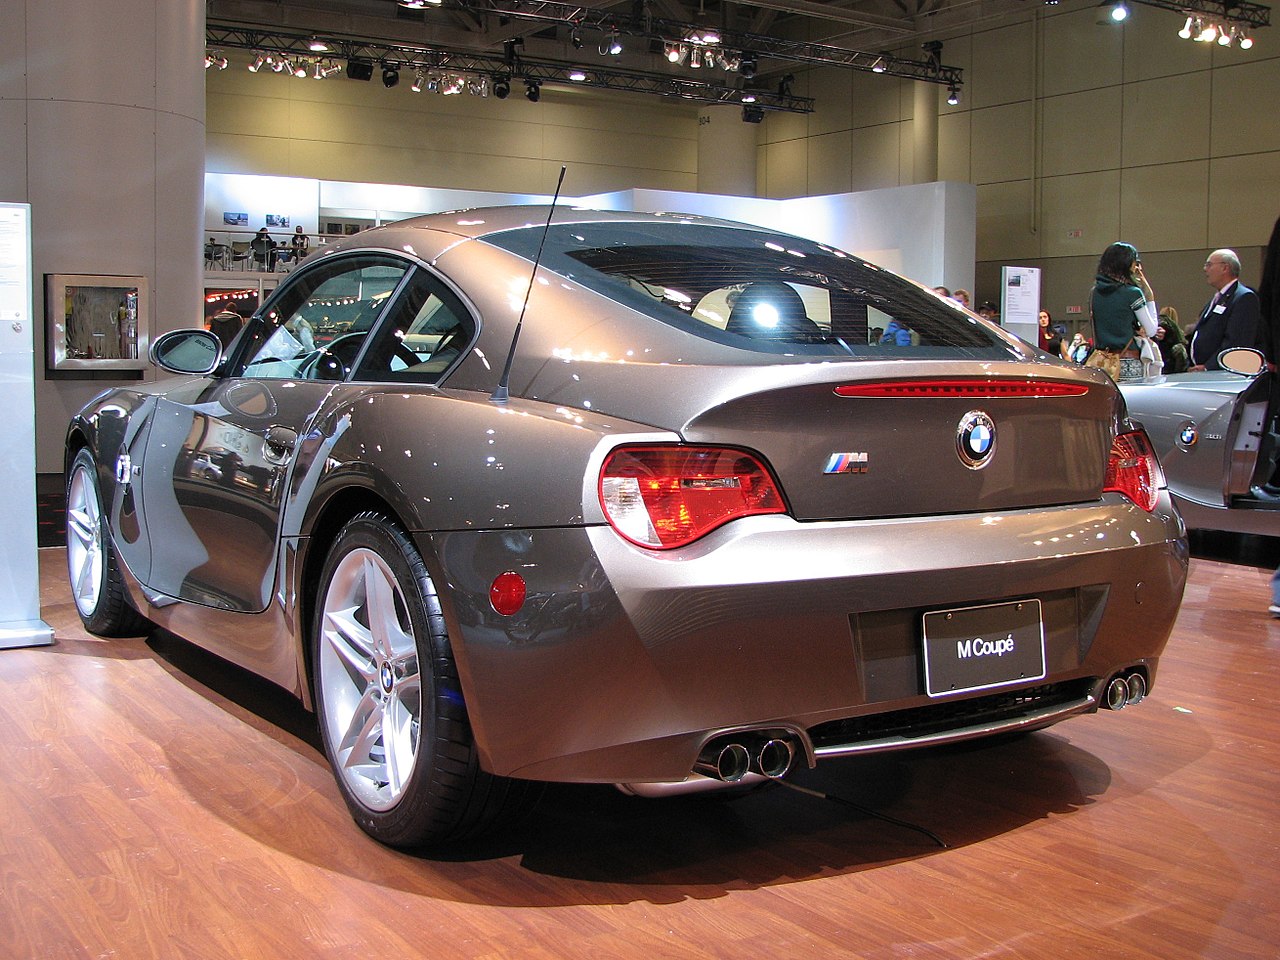 File:BMW Z4-M-Coupe resized.jpg - Wikimedia Commons